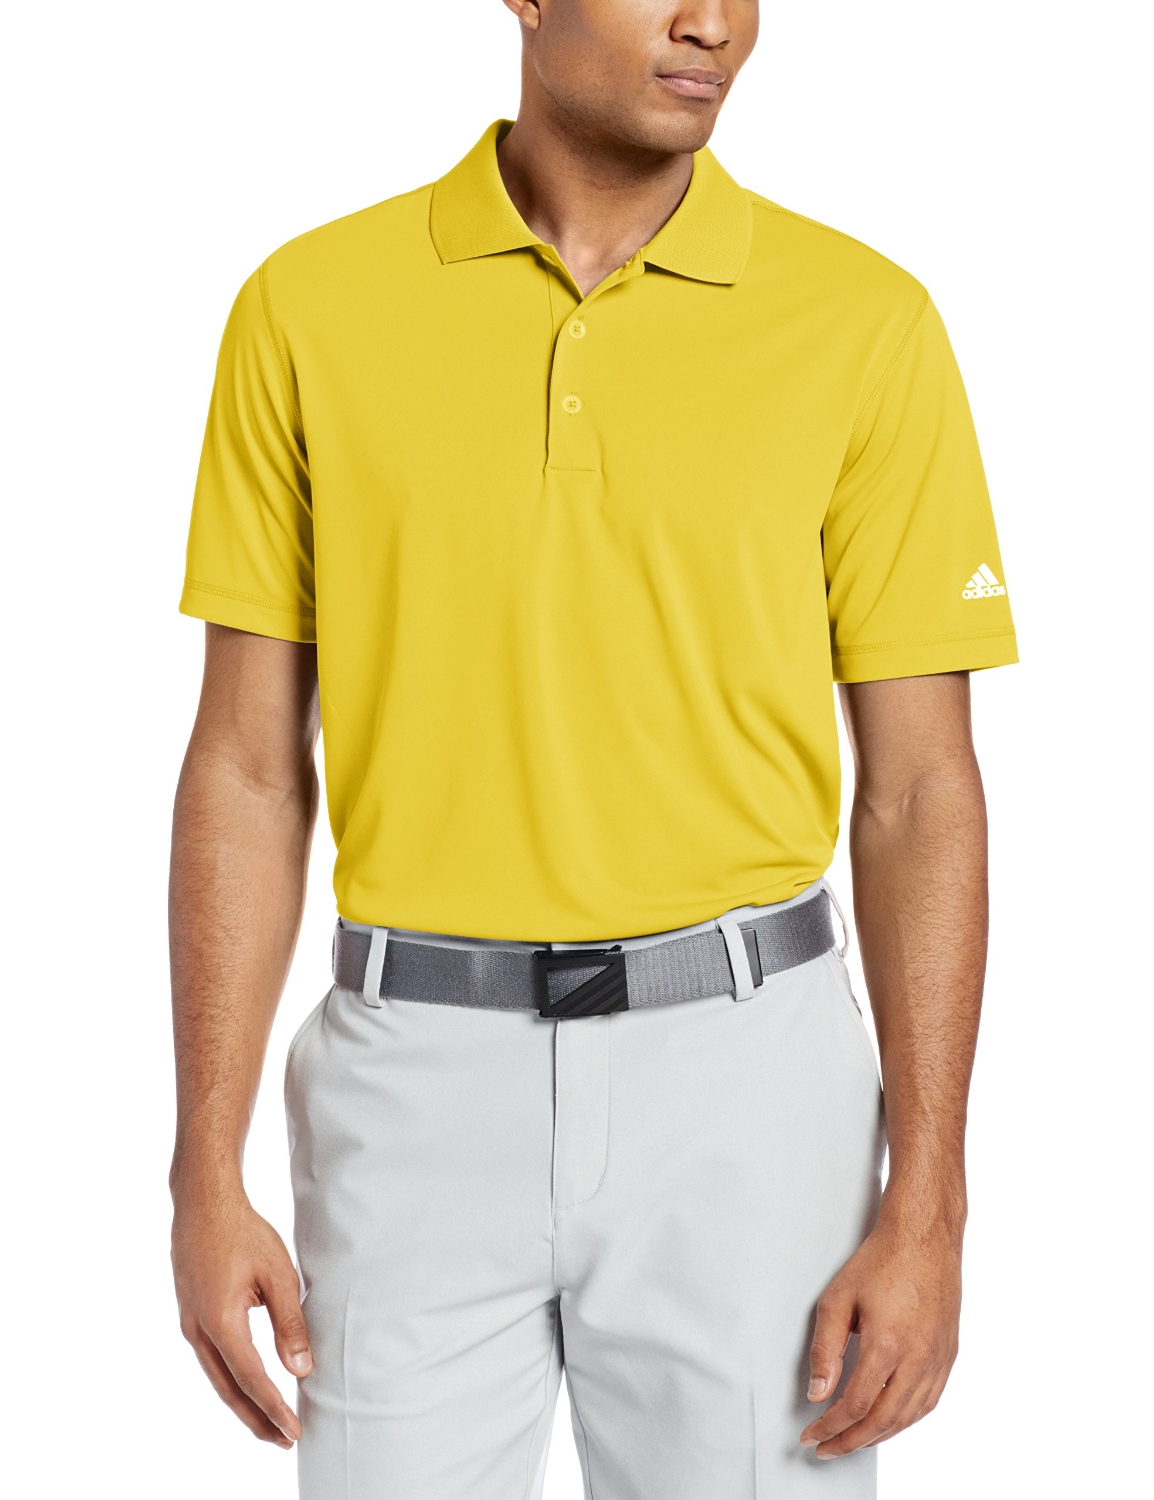 adidas yellow golf shirt